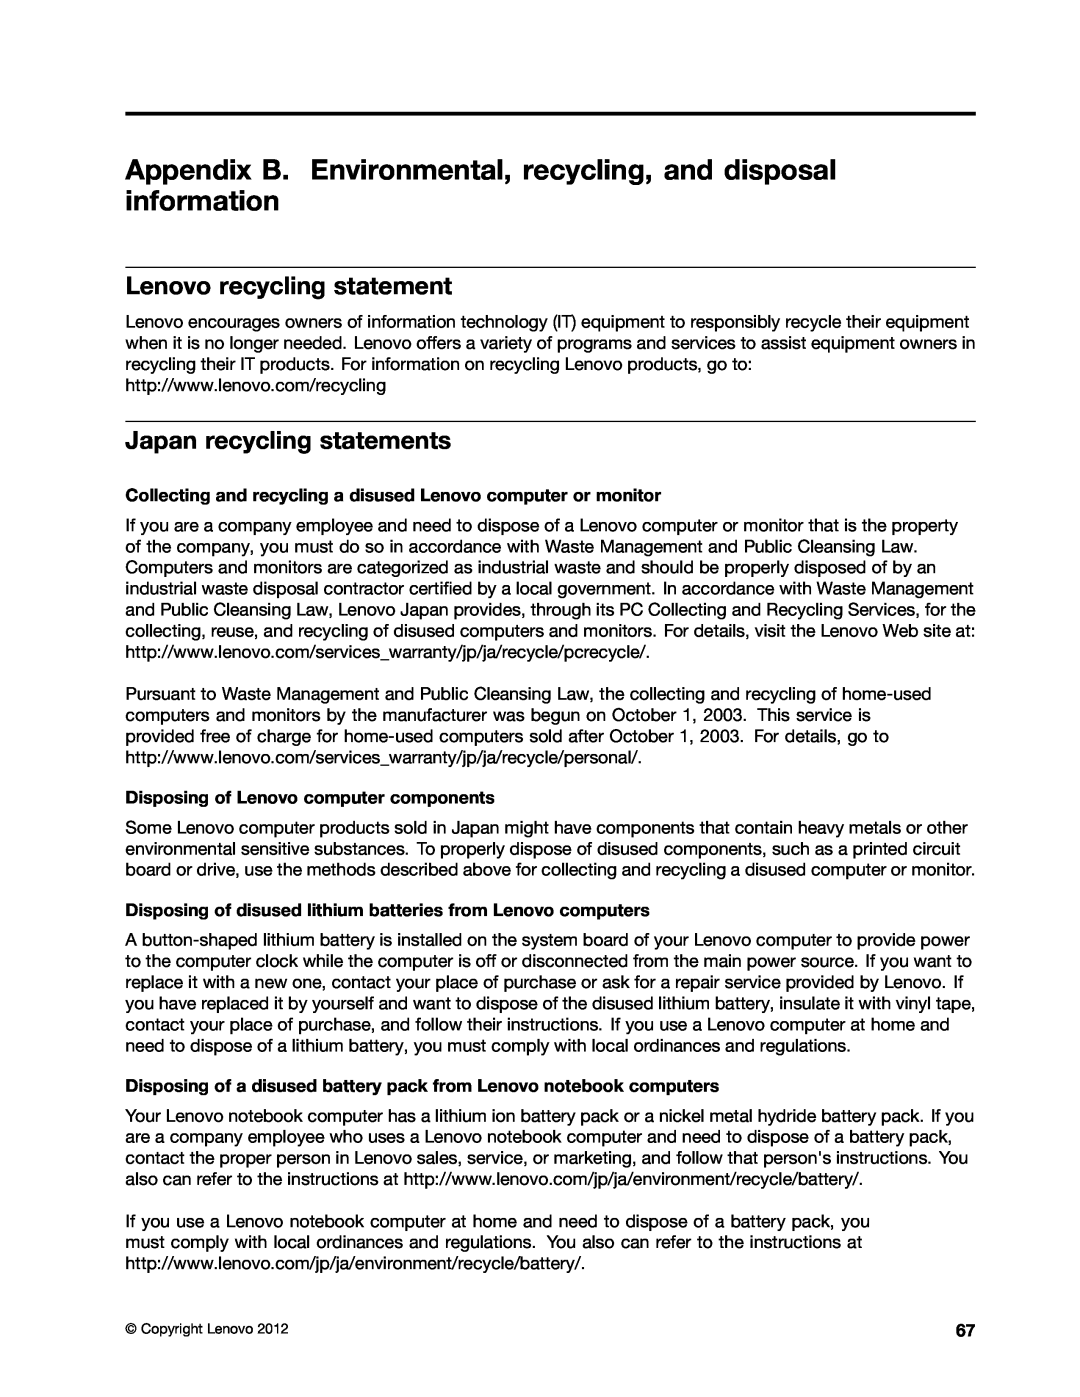 Lenovo 370245U, 36984UU Lenovo recycling statement, Japan recycling statements, Disposing of Lenovo computer components 